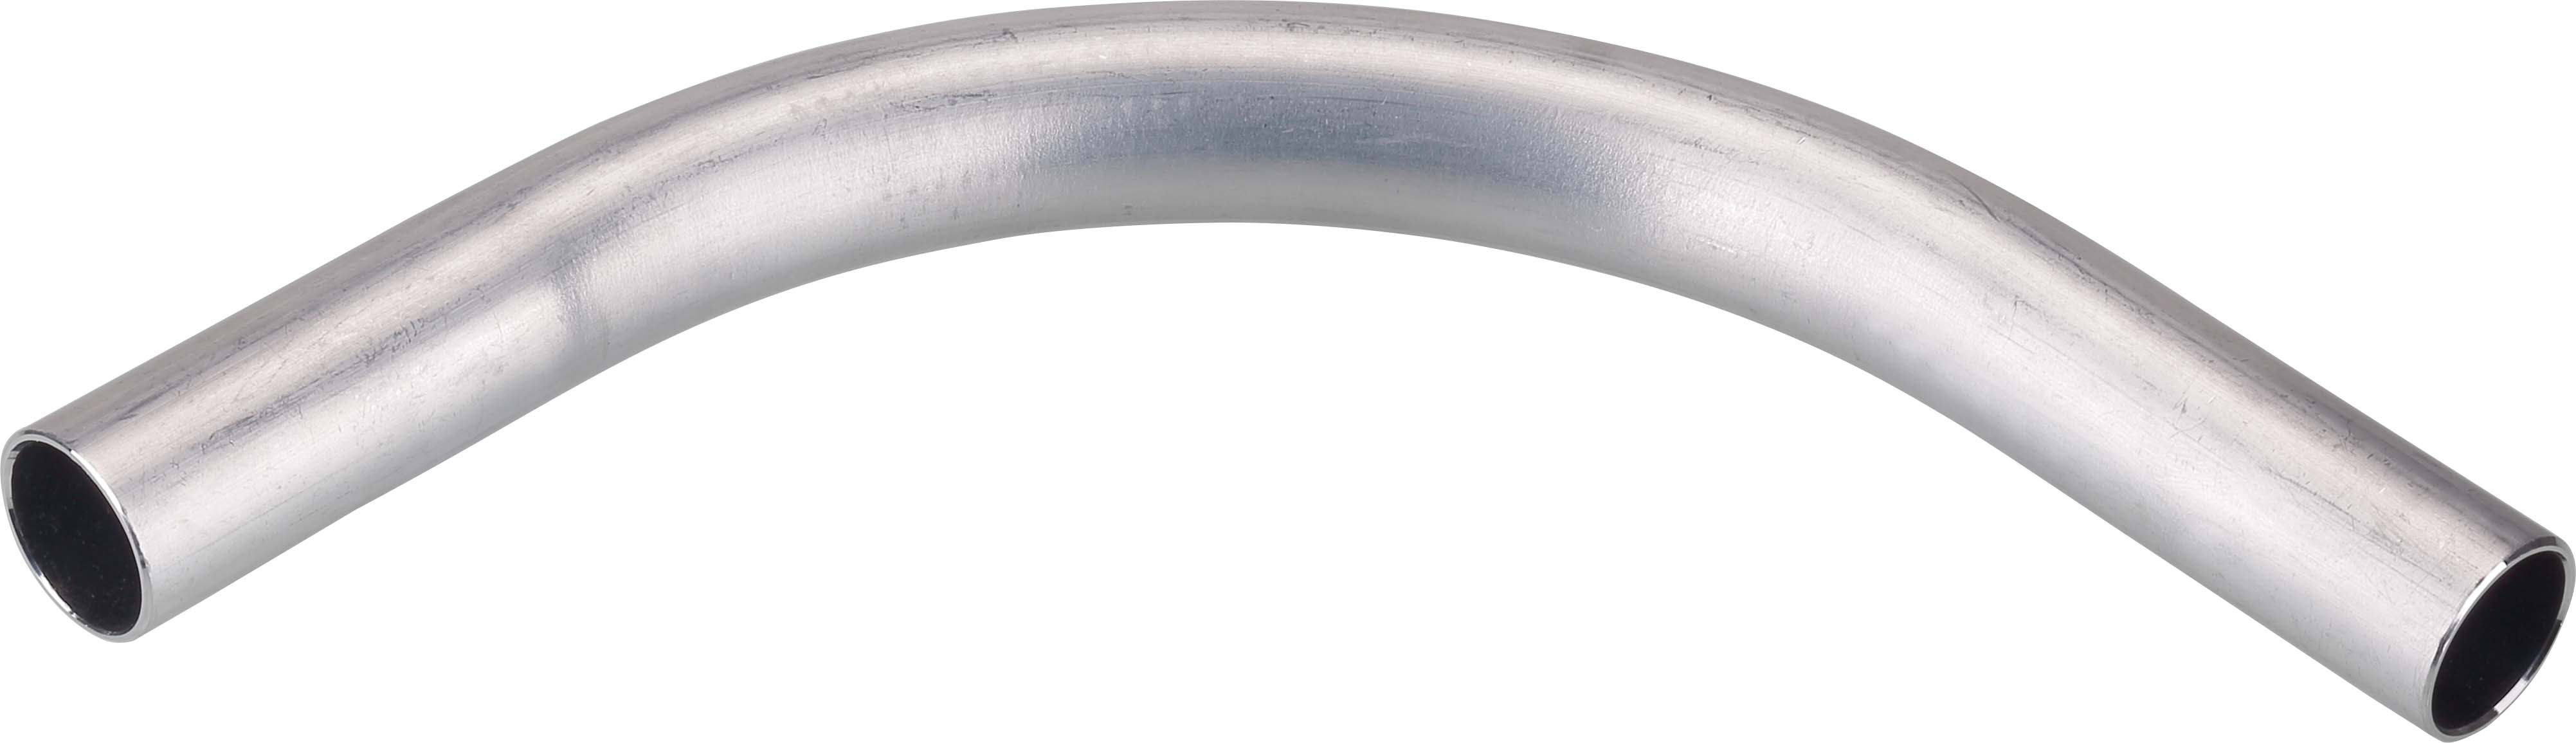 Fränkische Aluminium-Steckbogen ABS-E 25 - 20960025